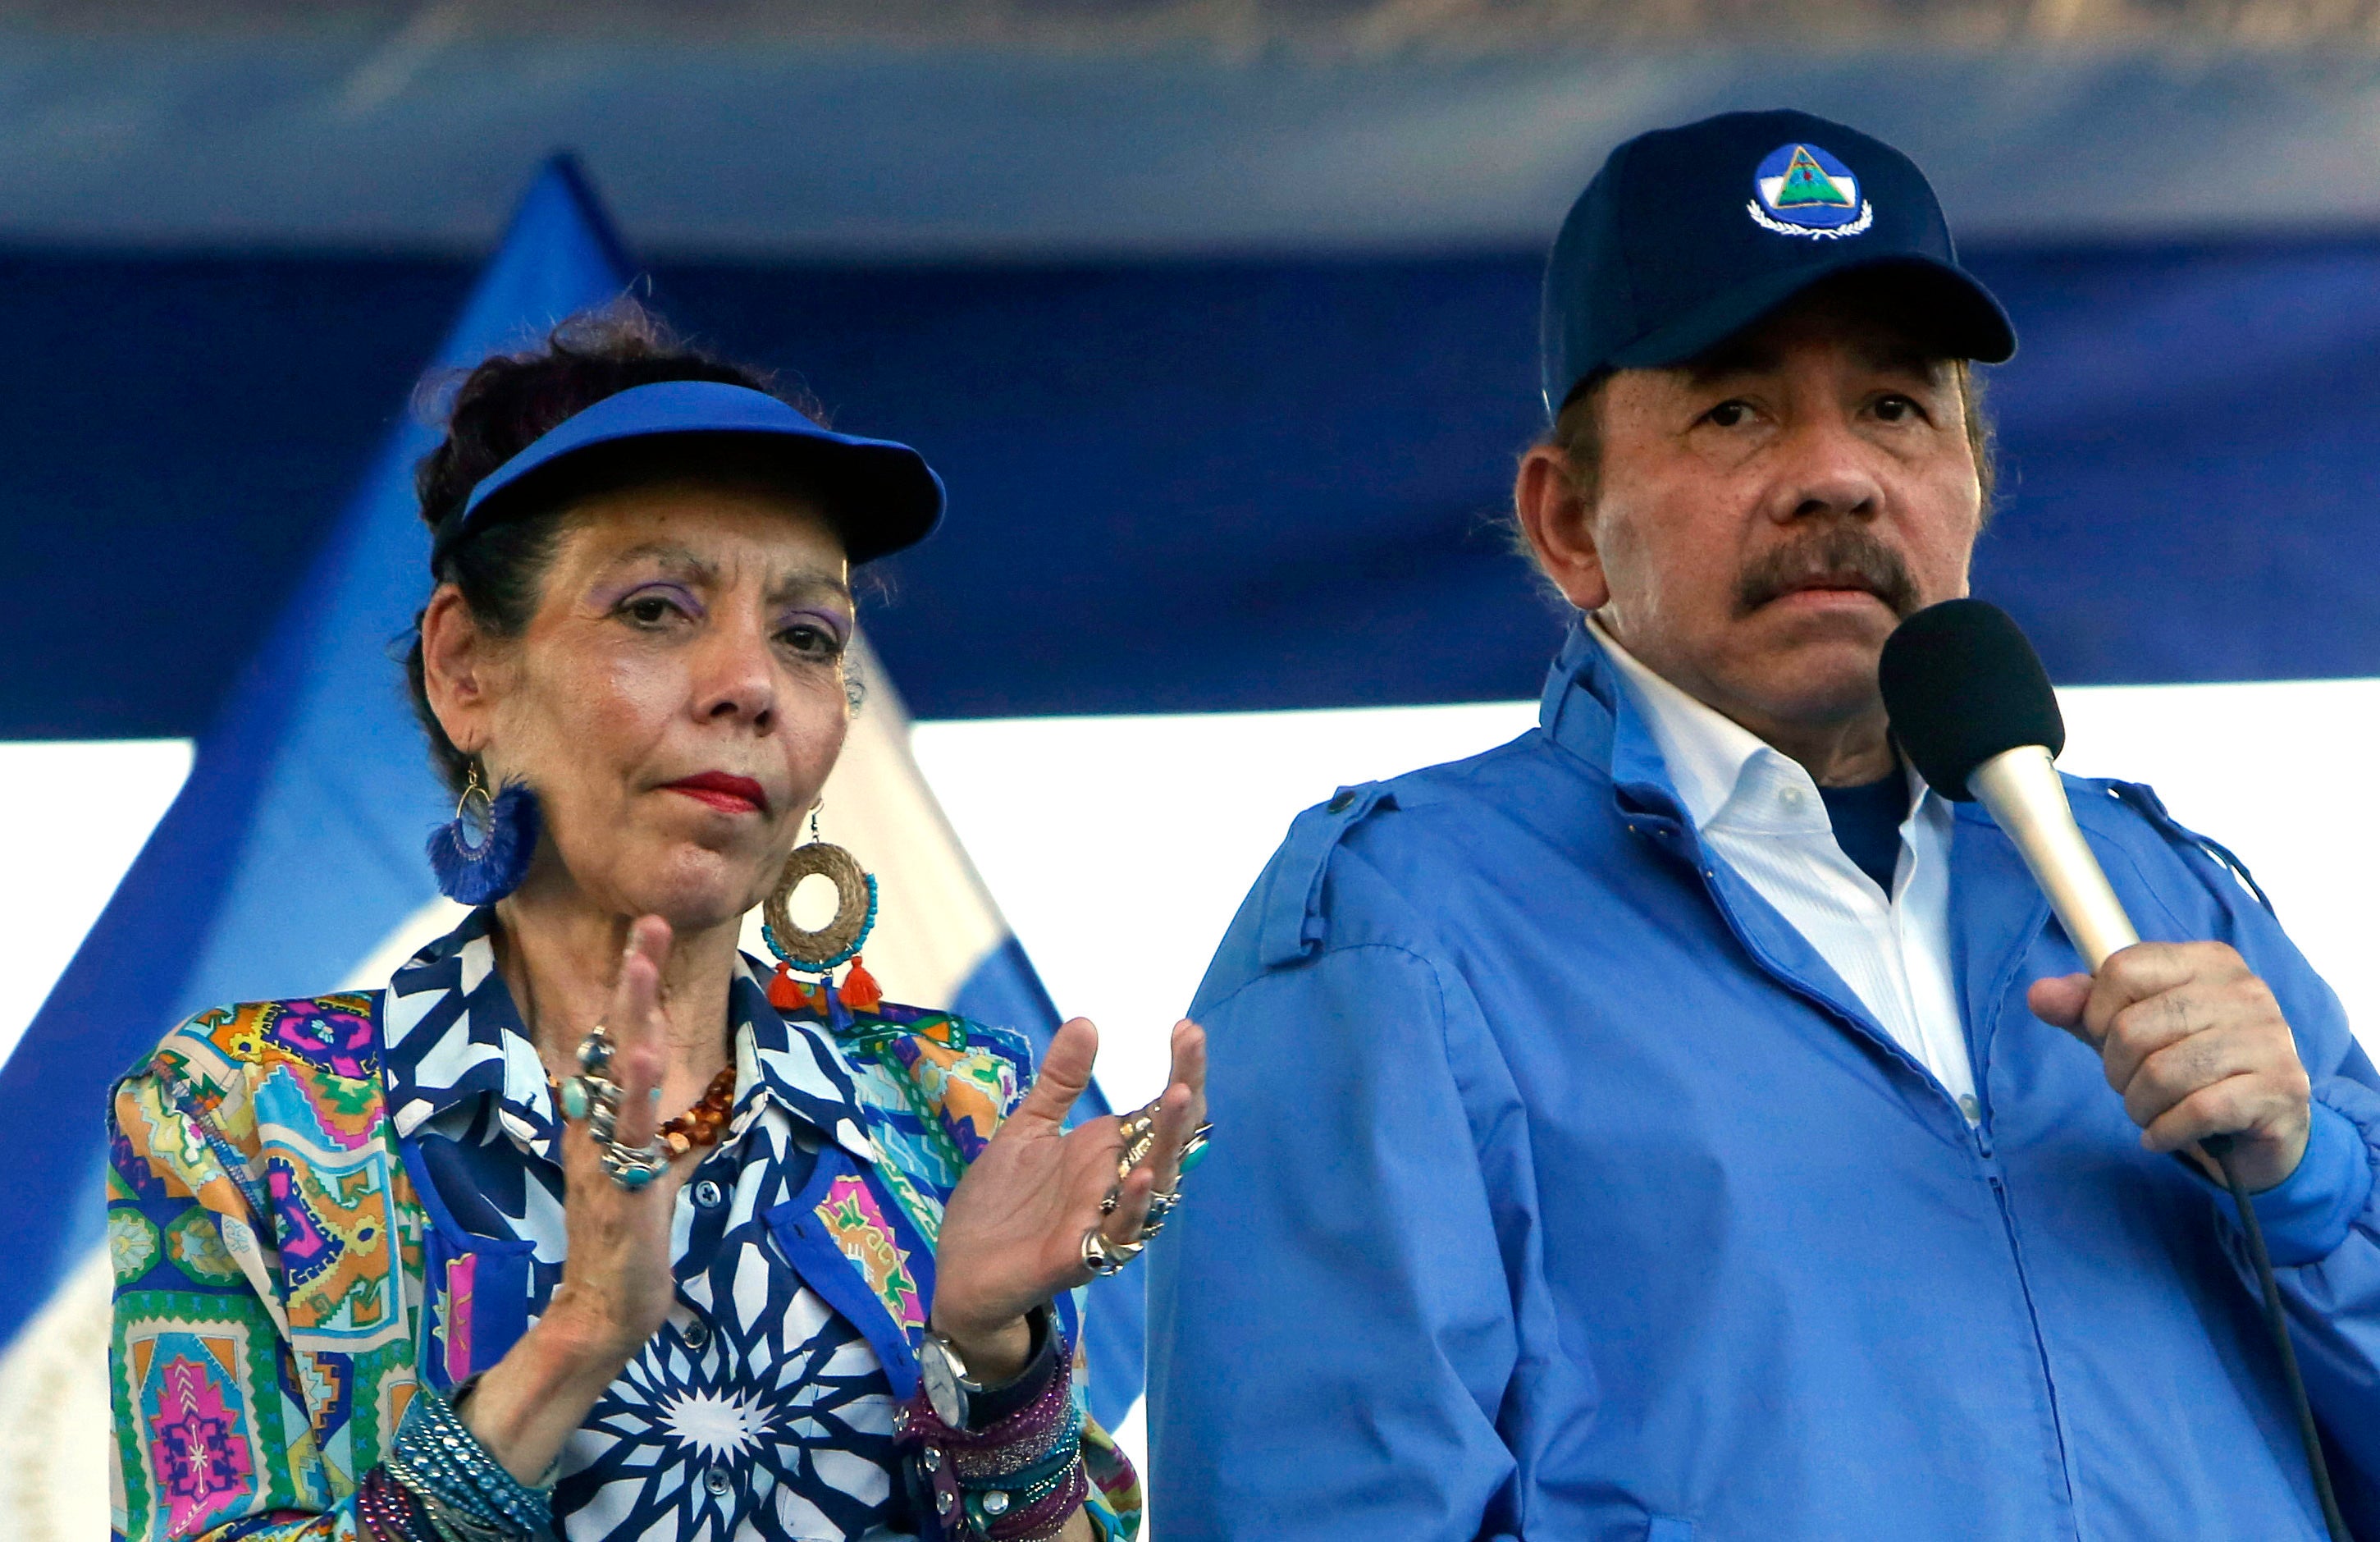 Nicaragua's president Daniel Ortega and his wife, vice-president Rosario Murillo, lead a rally in Managua